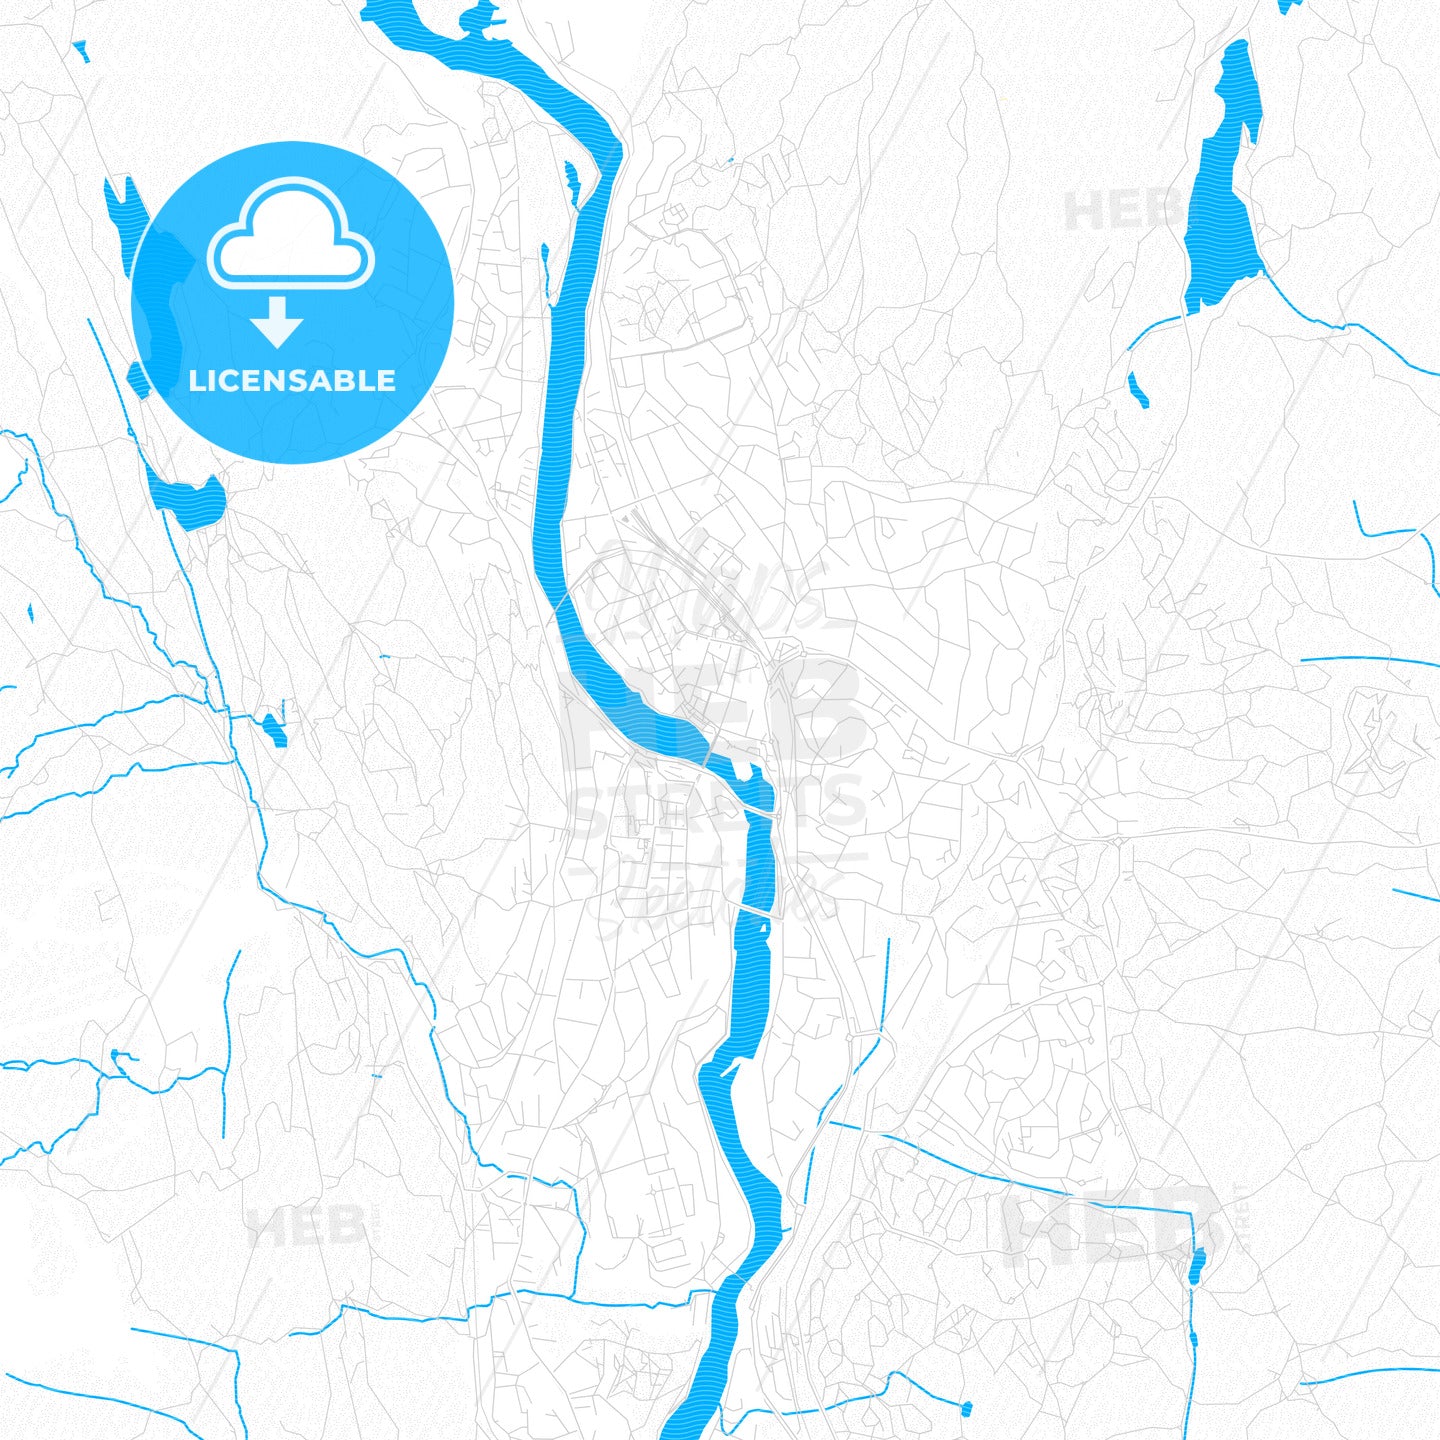 Kongsberg, Norway PDF vector map with water in focus